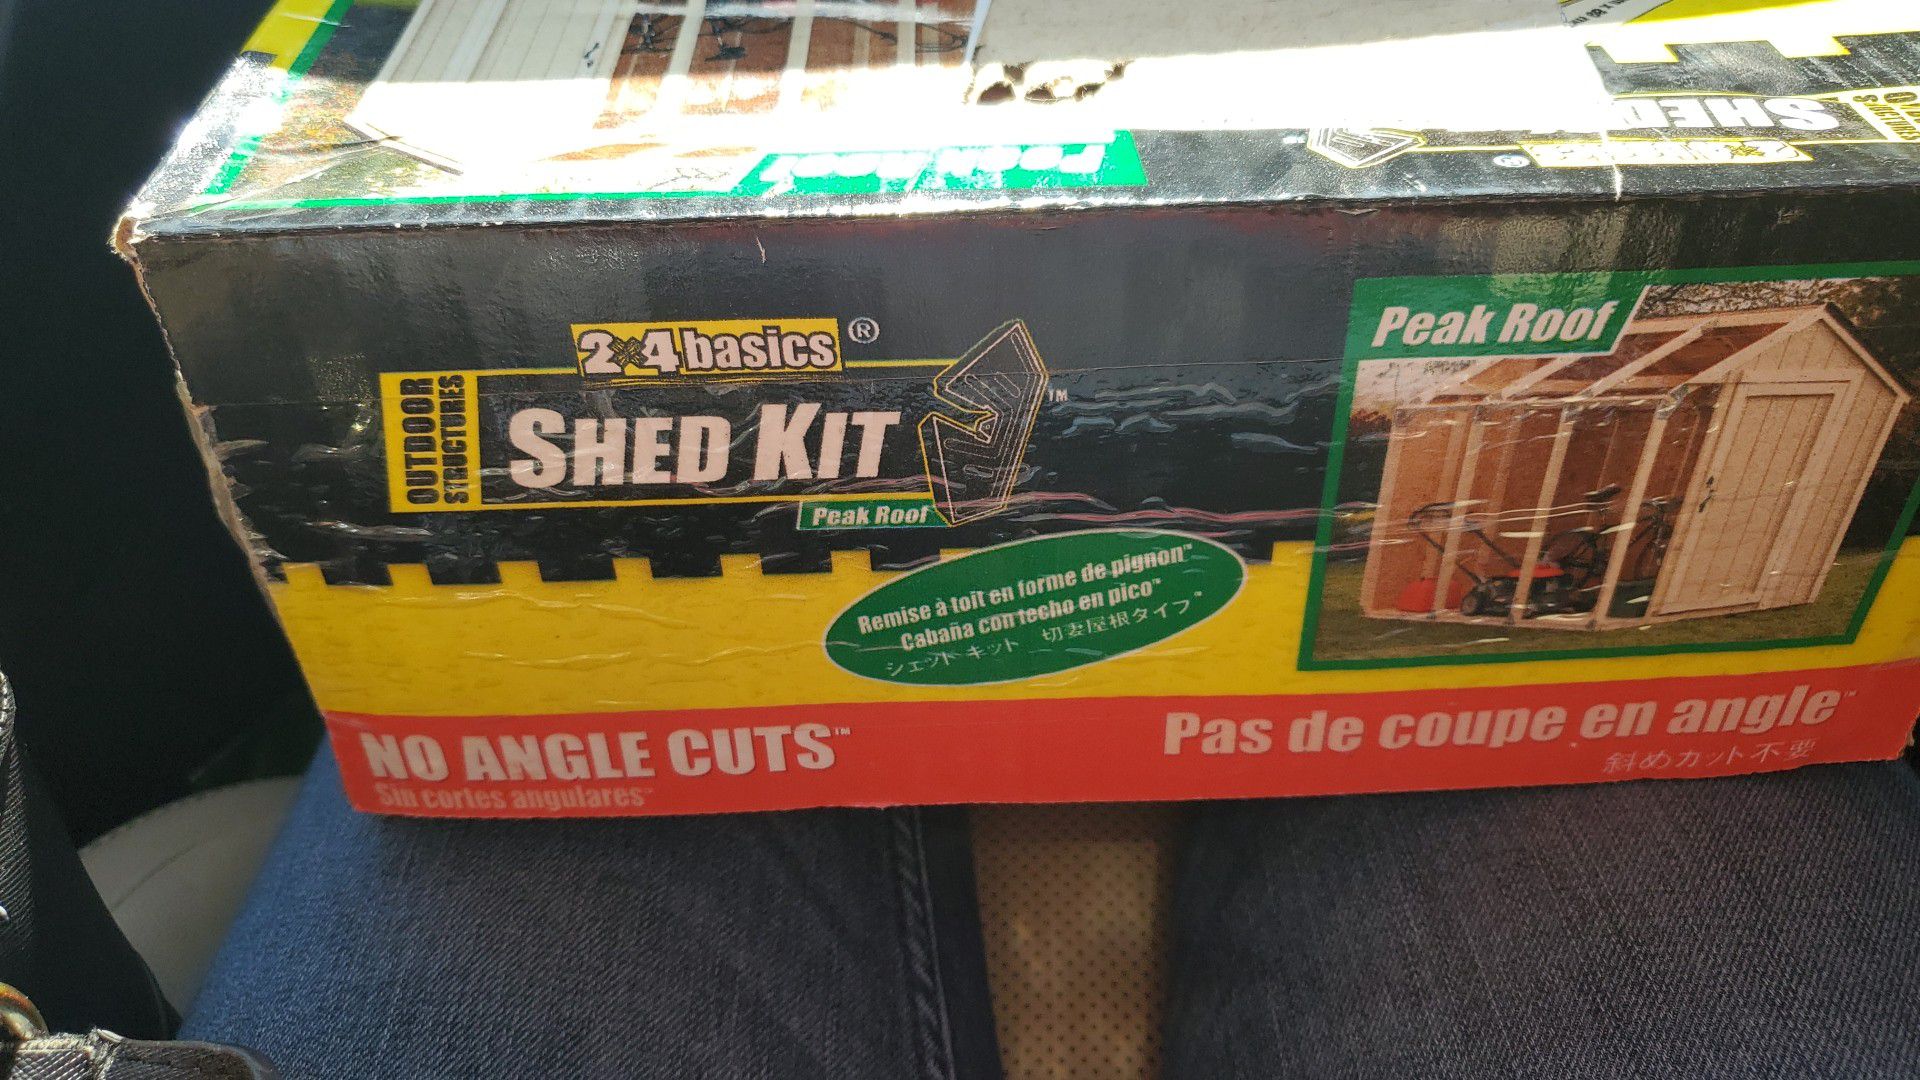 Shed kit